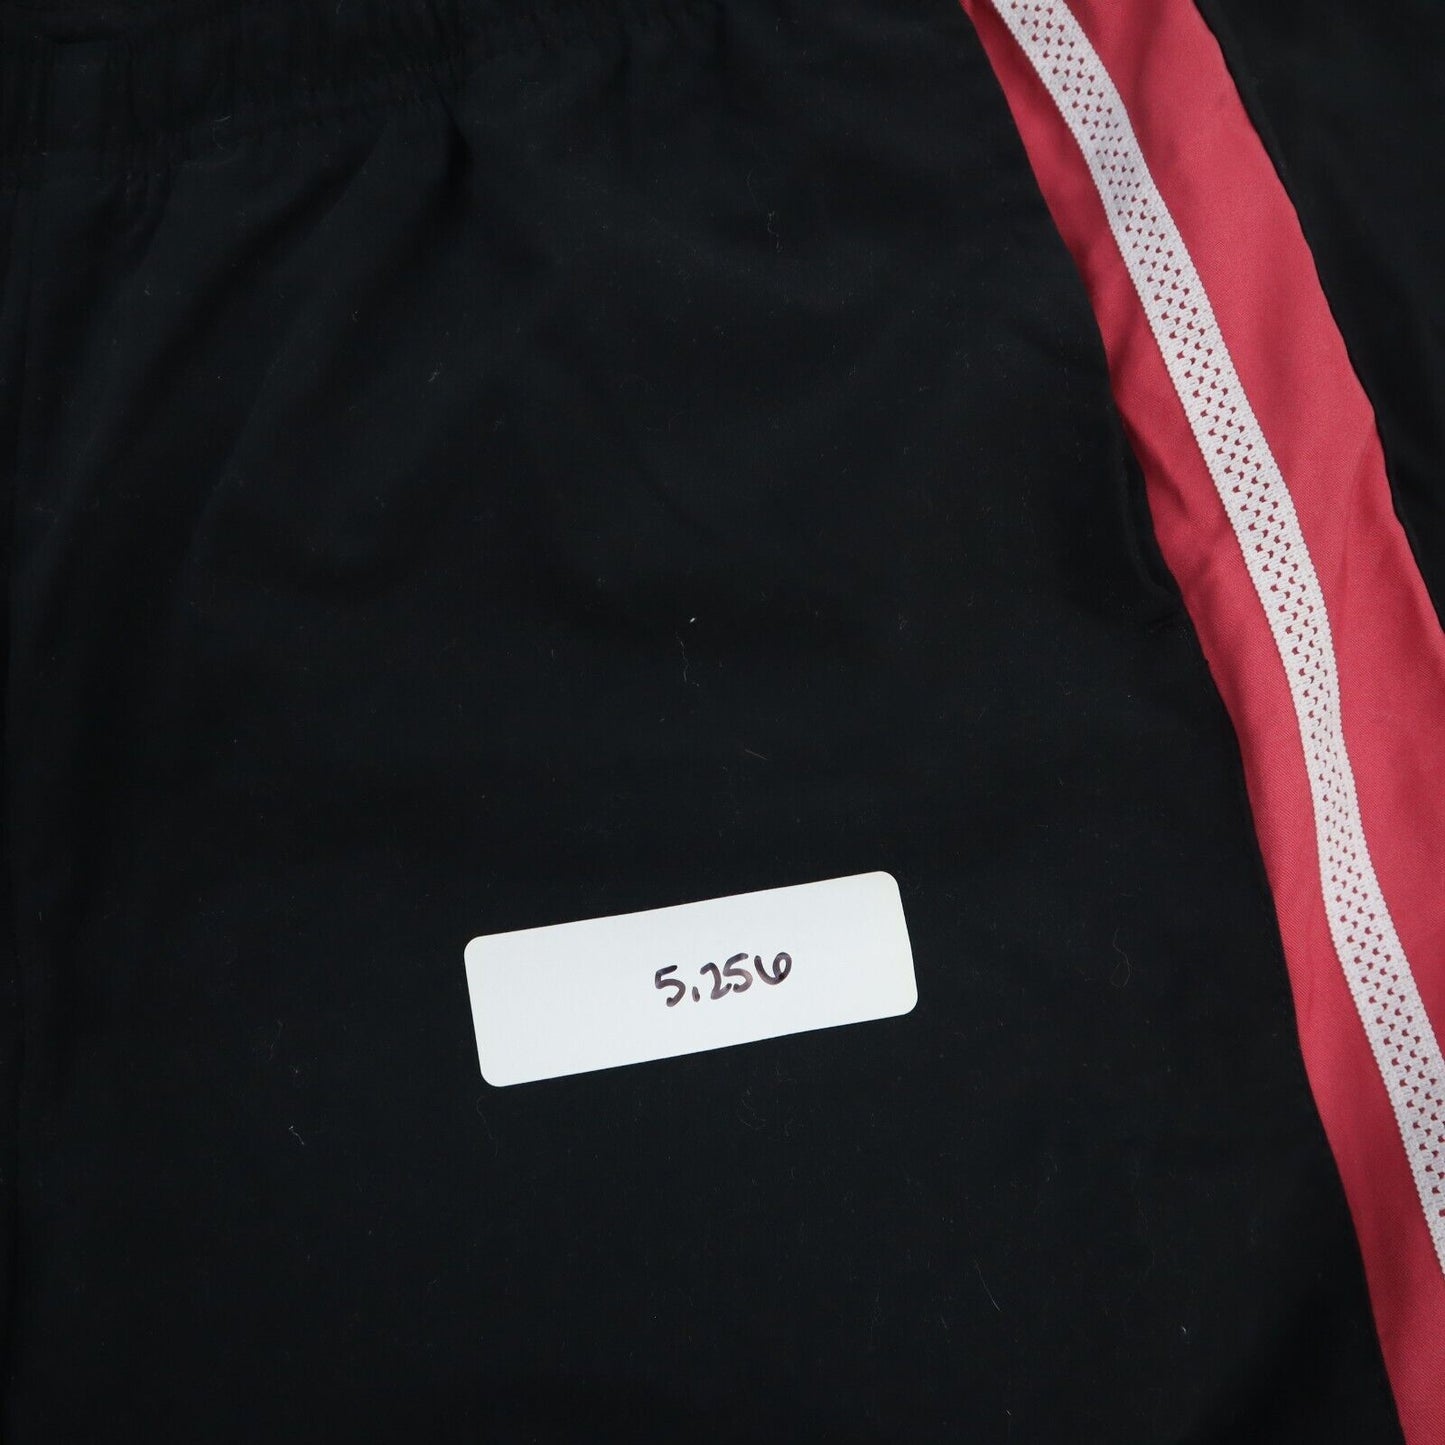 Adidas Pants Mens Black L Pink/white 3 Striped Wide Leg Elastic Waist Sweatpants